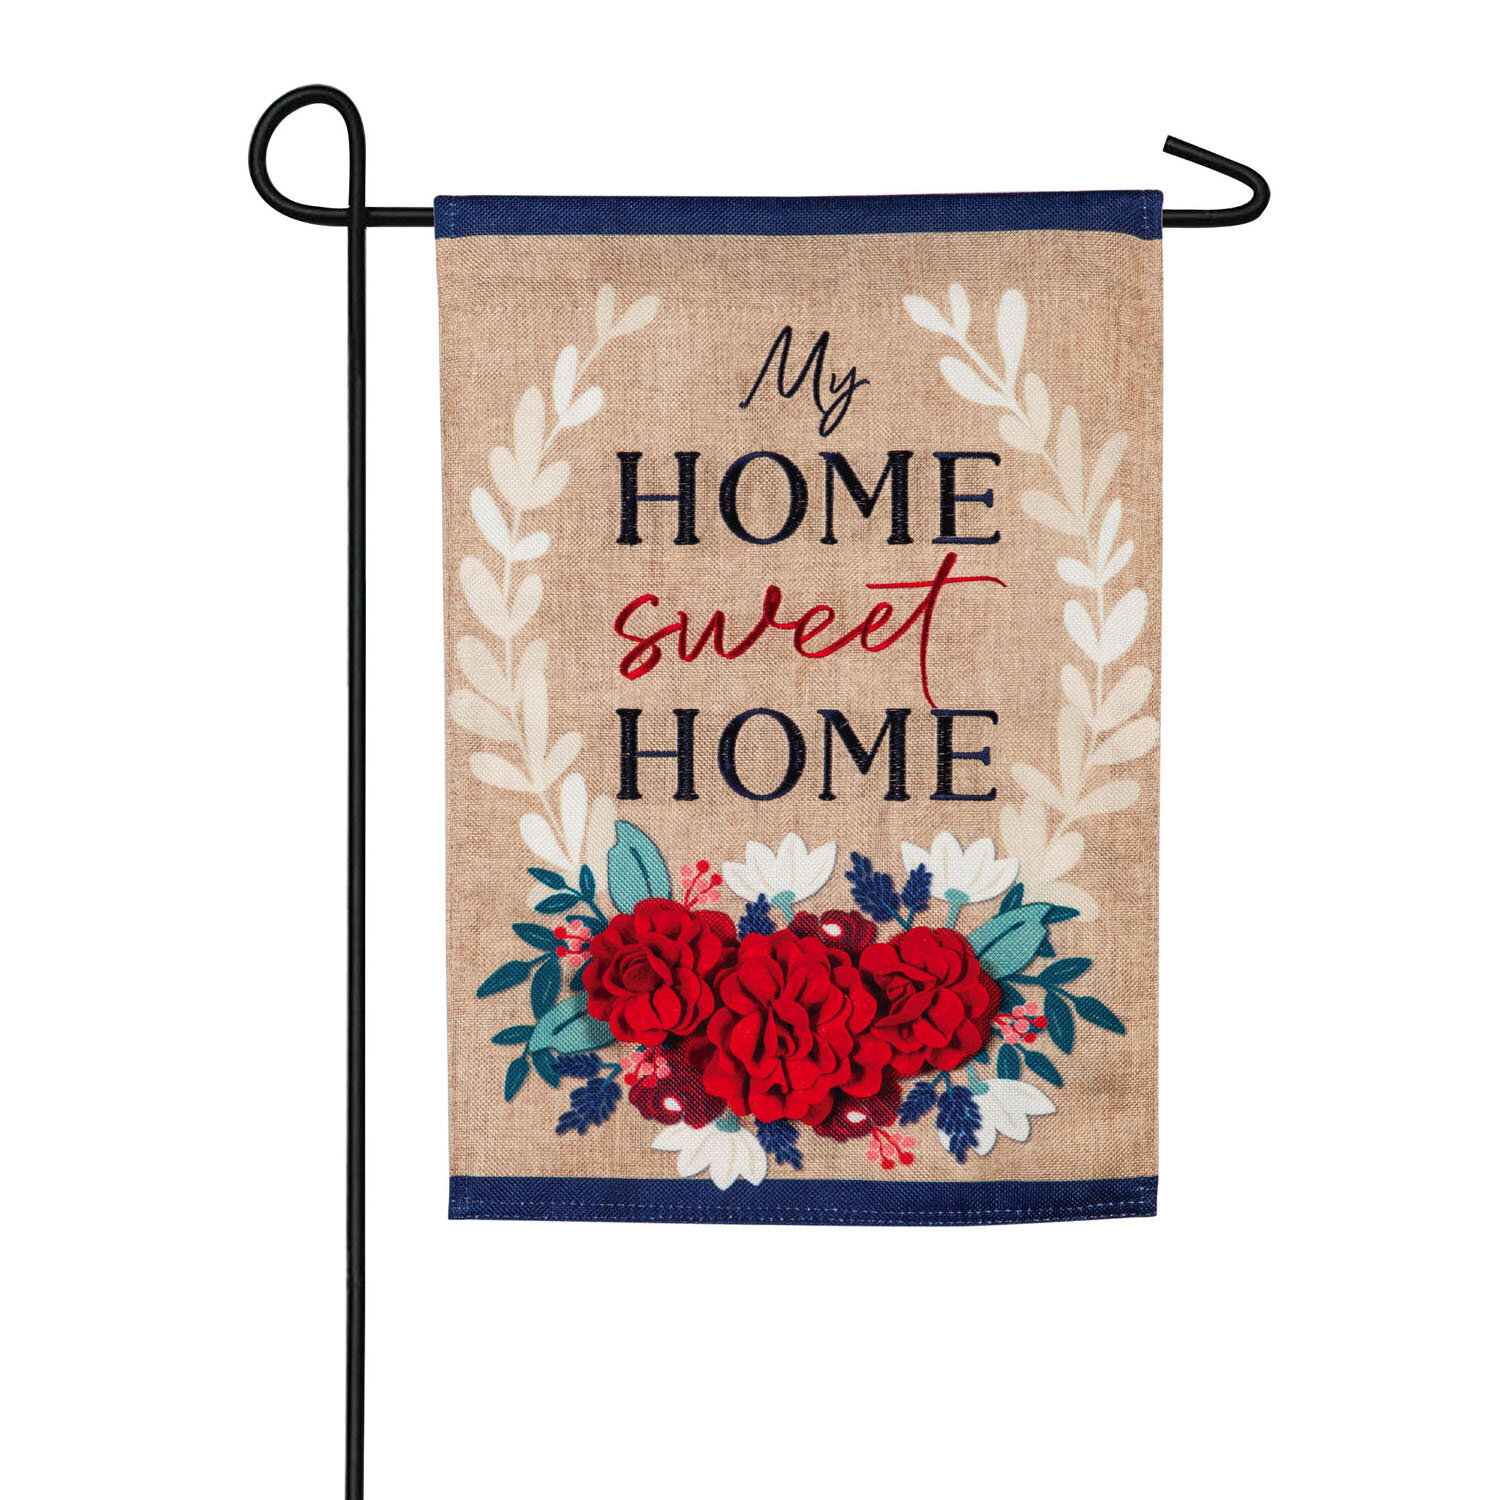 Sweet Home Red Rose Flowers 12x18" Garden Flag House Yard Banner Decor Flags 